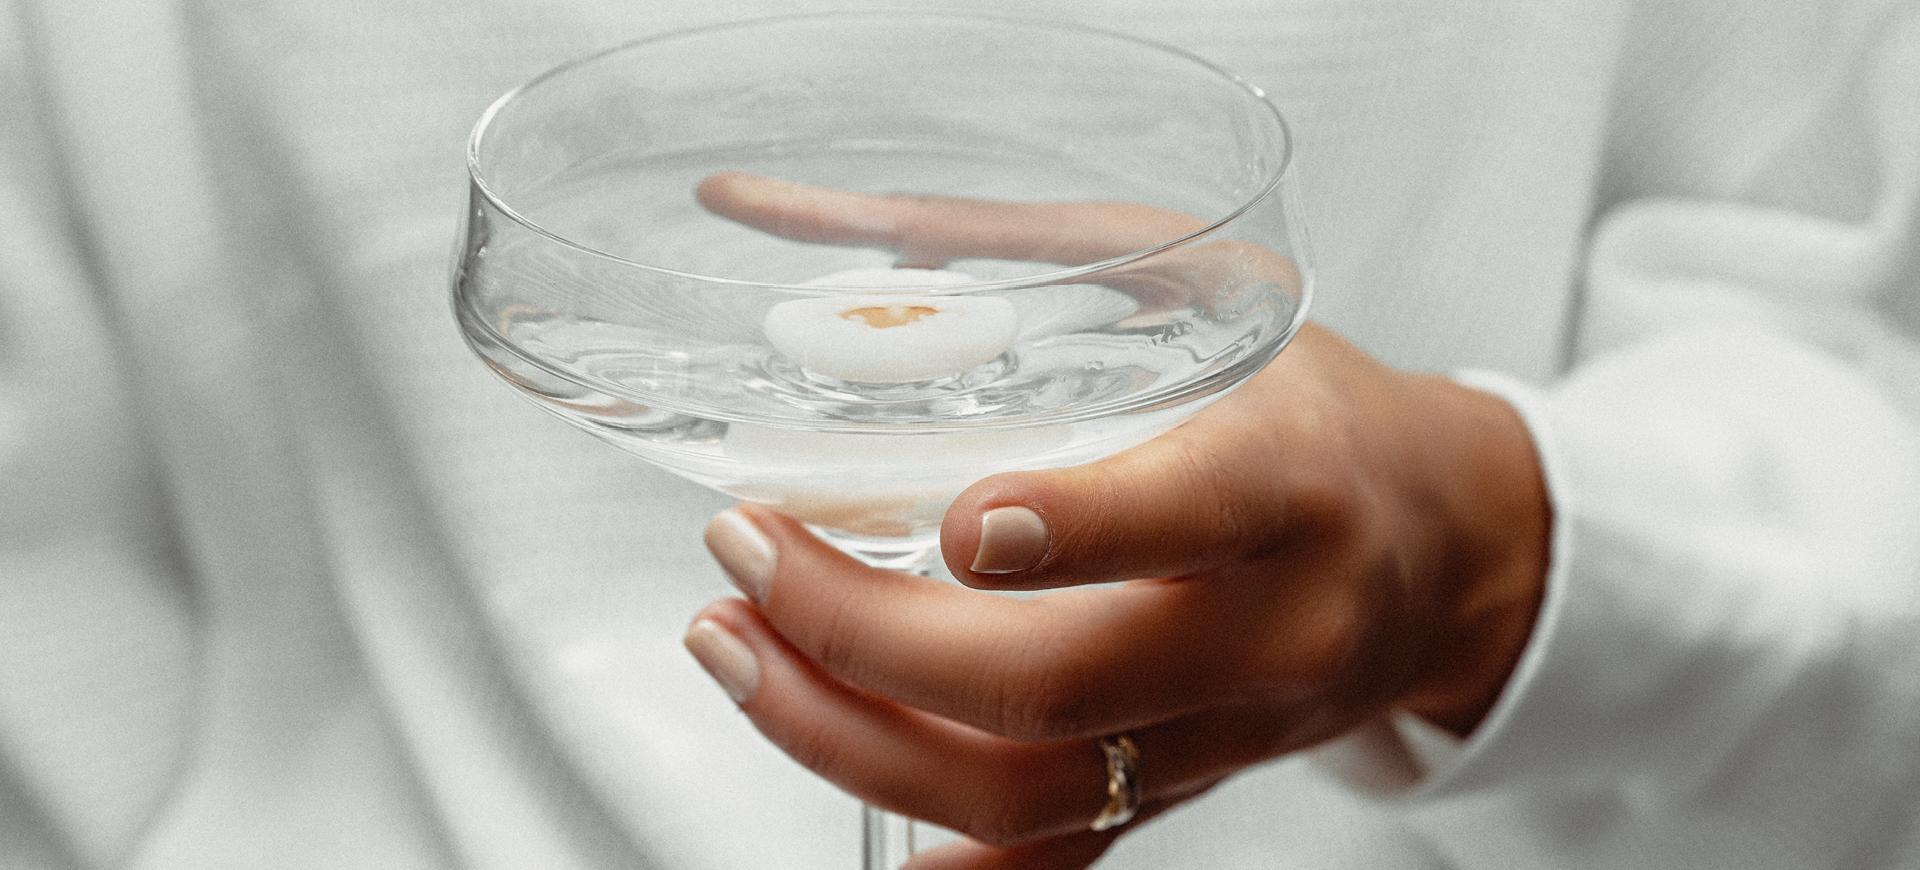 Le Martini Dry, un classique intemporel de la mixologie